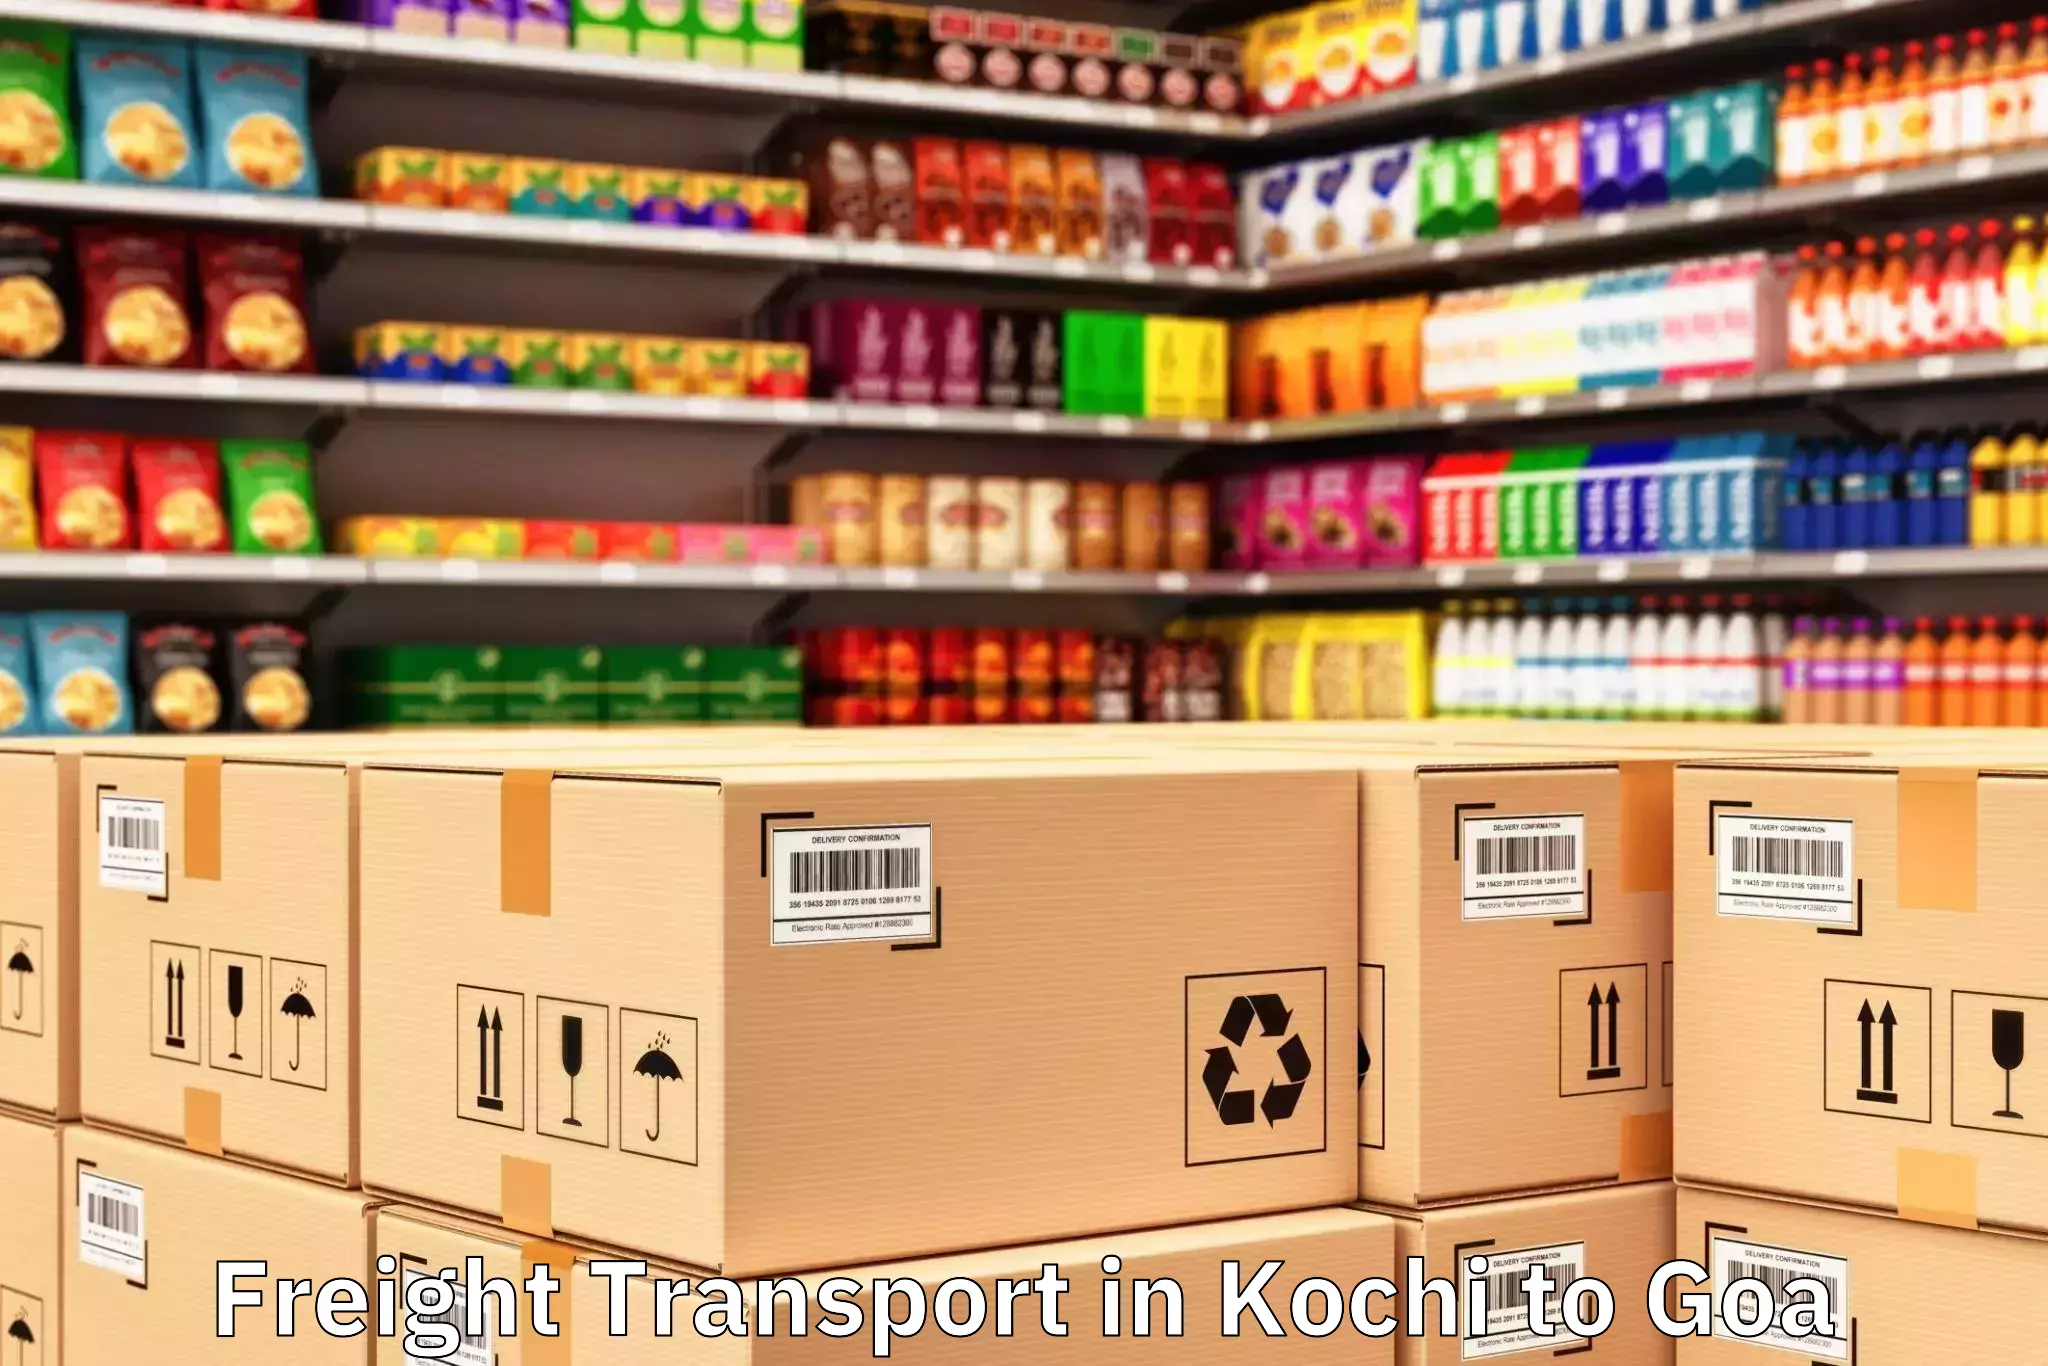 Quality Kochi to Baga Freight Transport